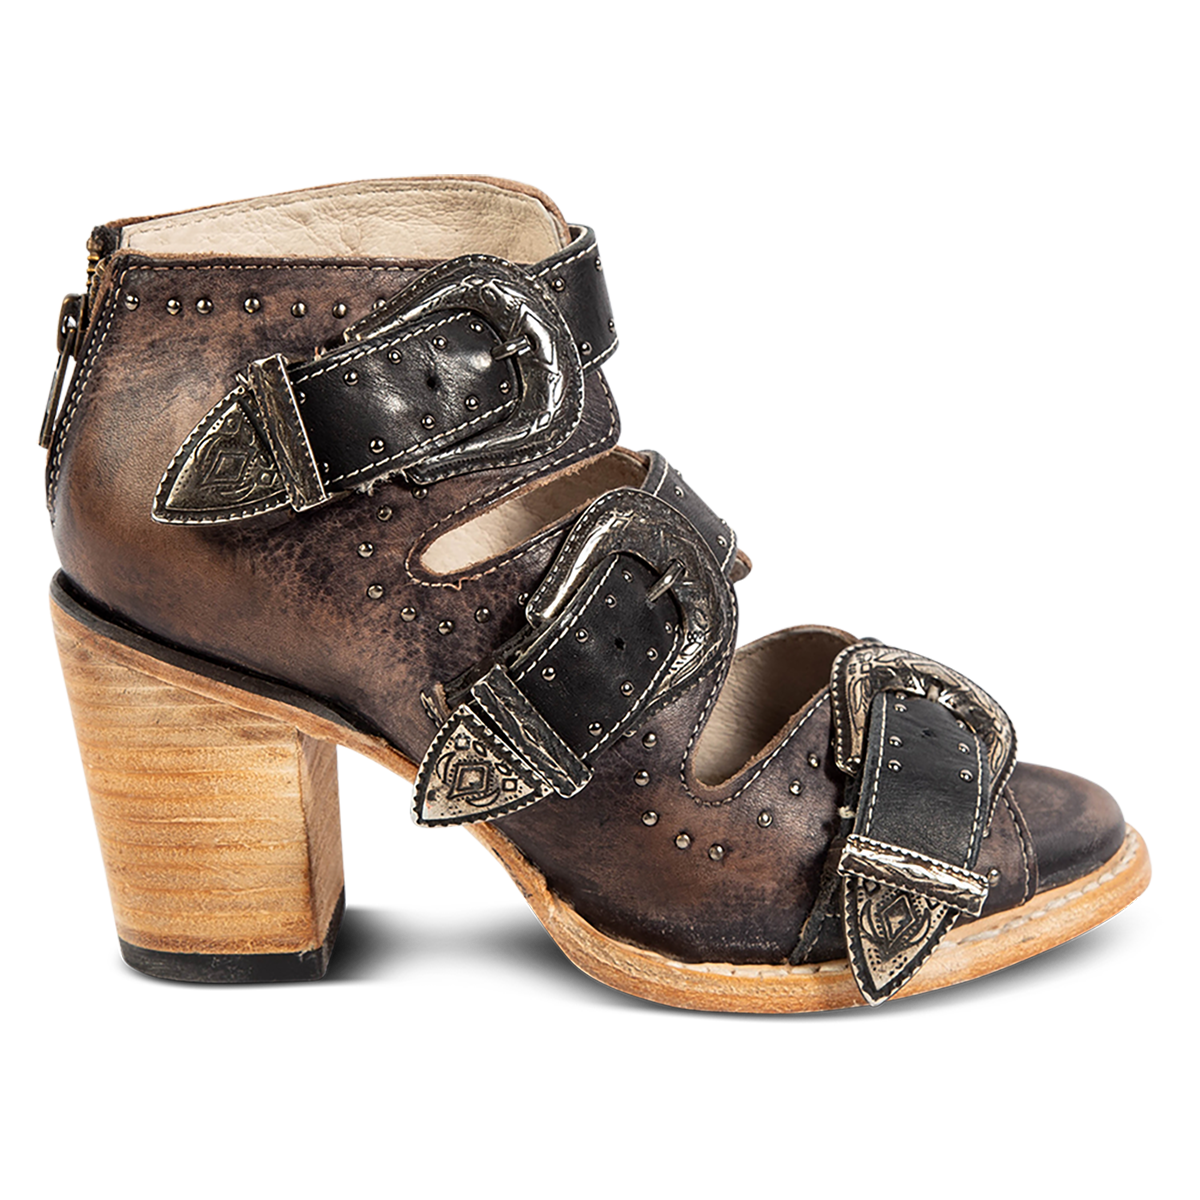 FREEBIRD women's Violet black distressed leather sandal with adjustable shaft buckles and metal embellishments